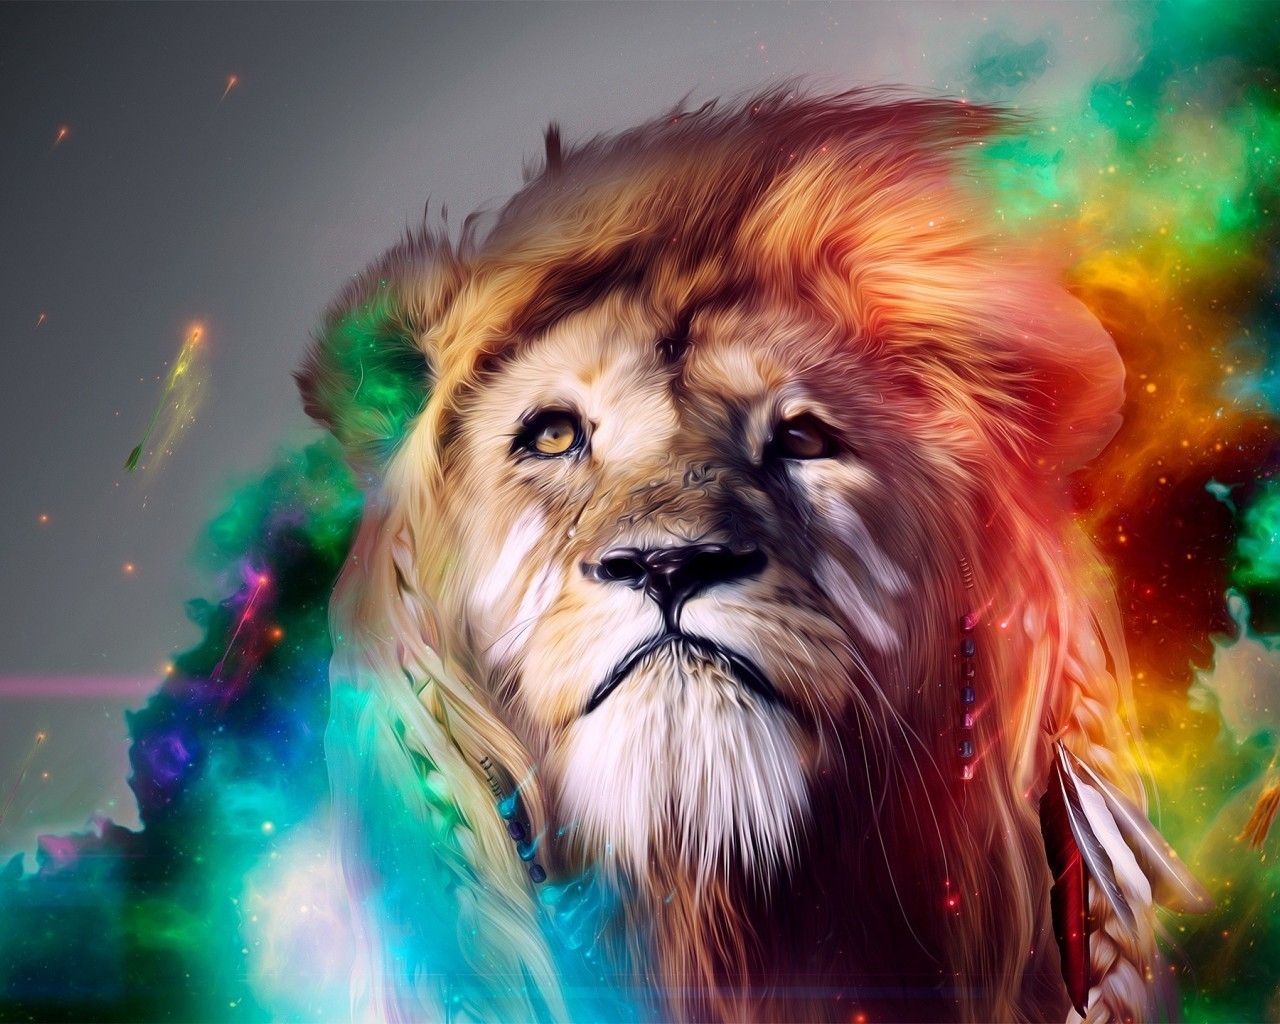 Rainbow Lion for 1280 x 1024 resolution